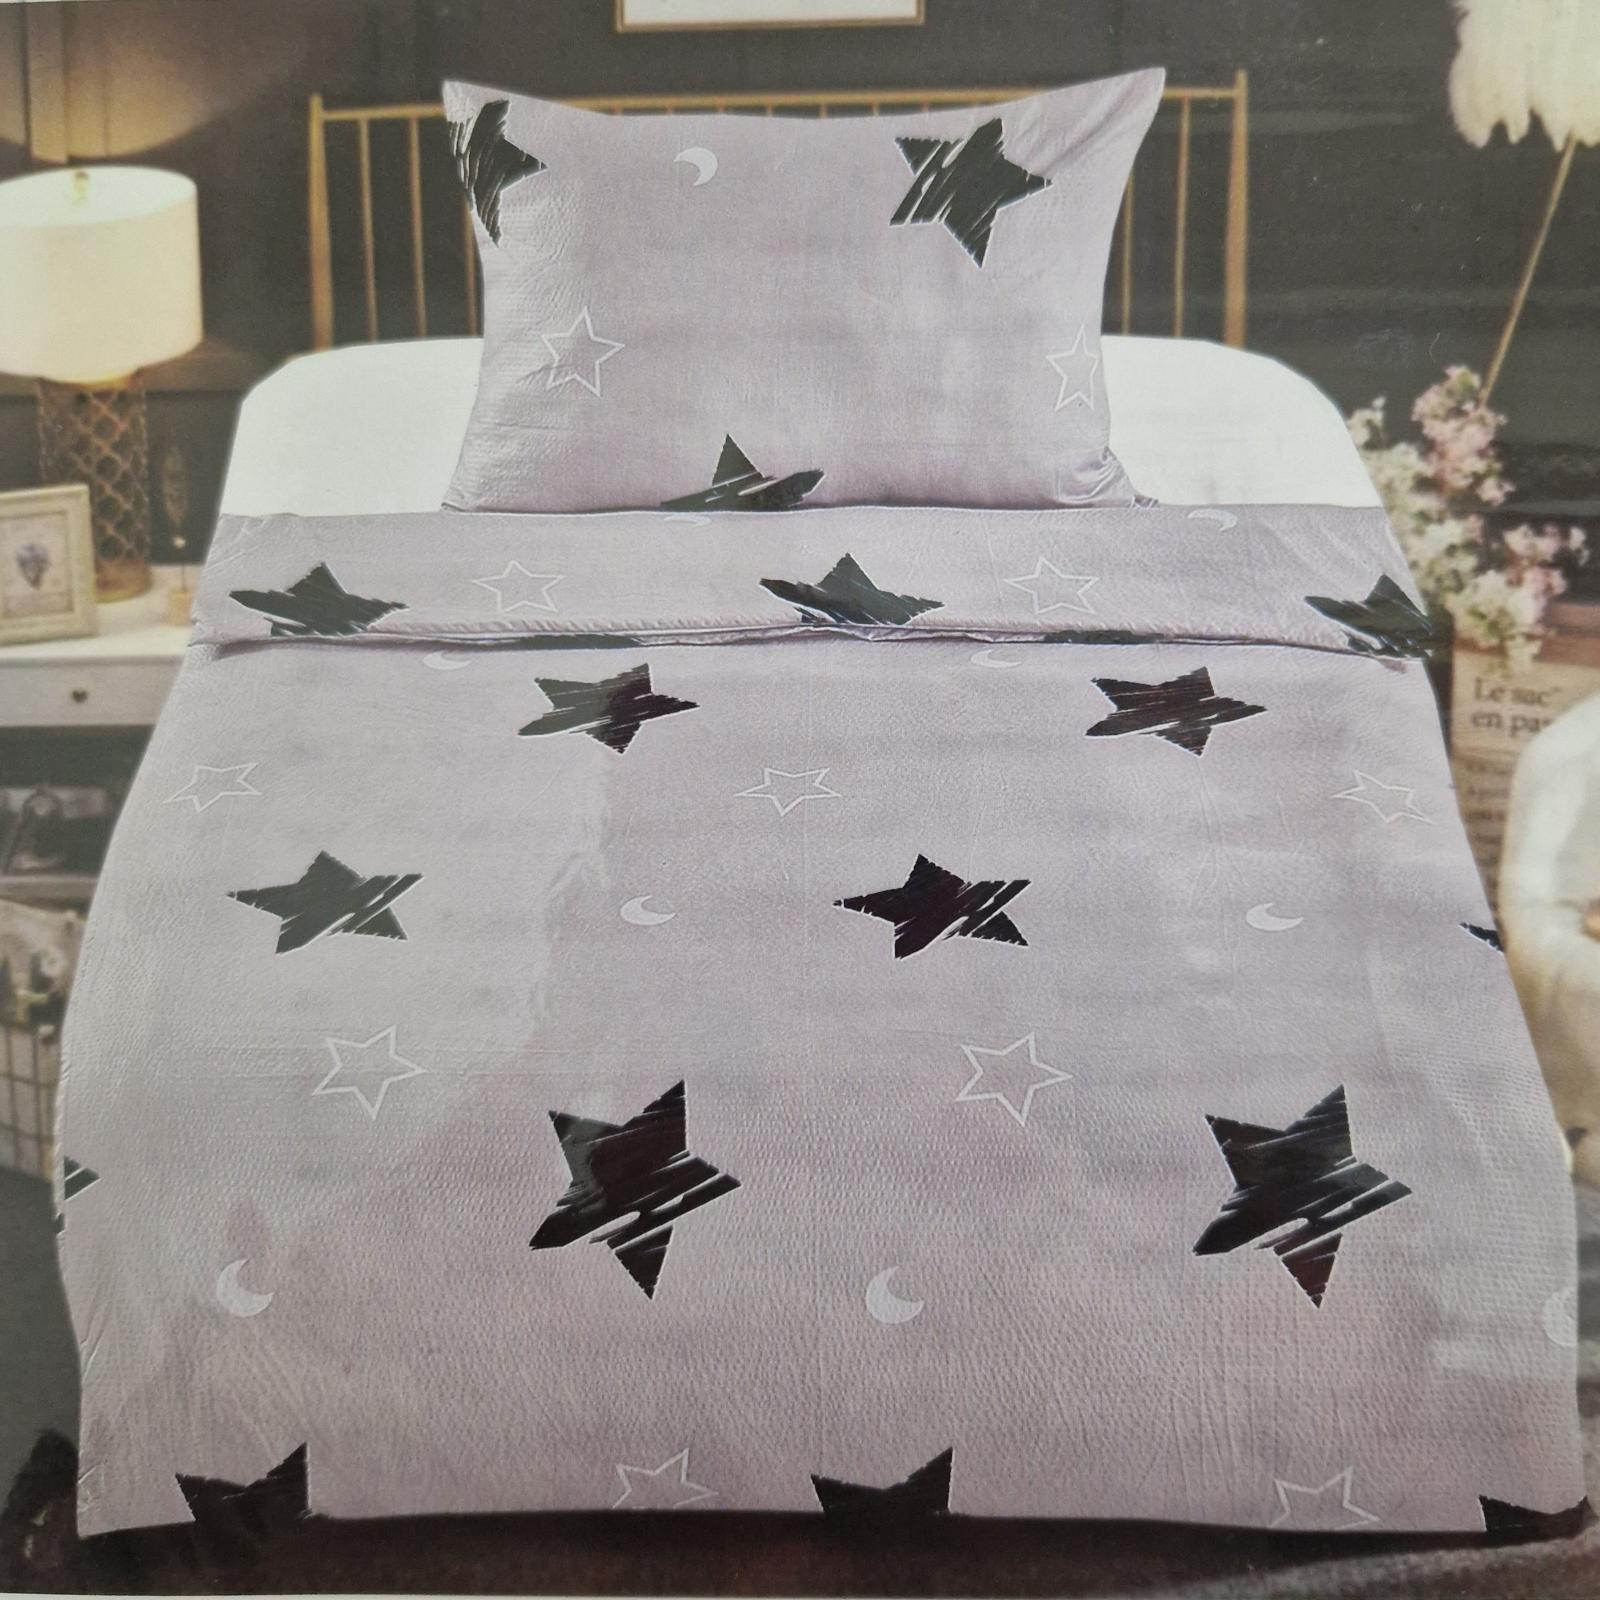 Krepové obliečky s hviezdami - GREY STAR - Bytový textil